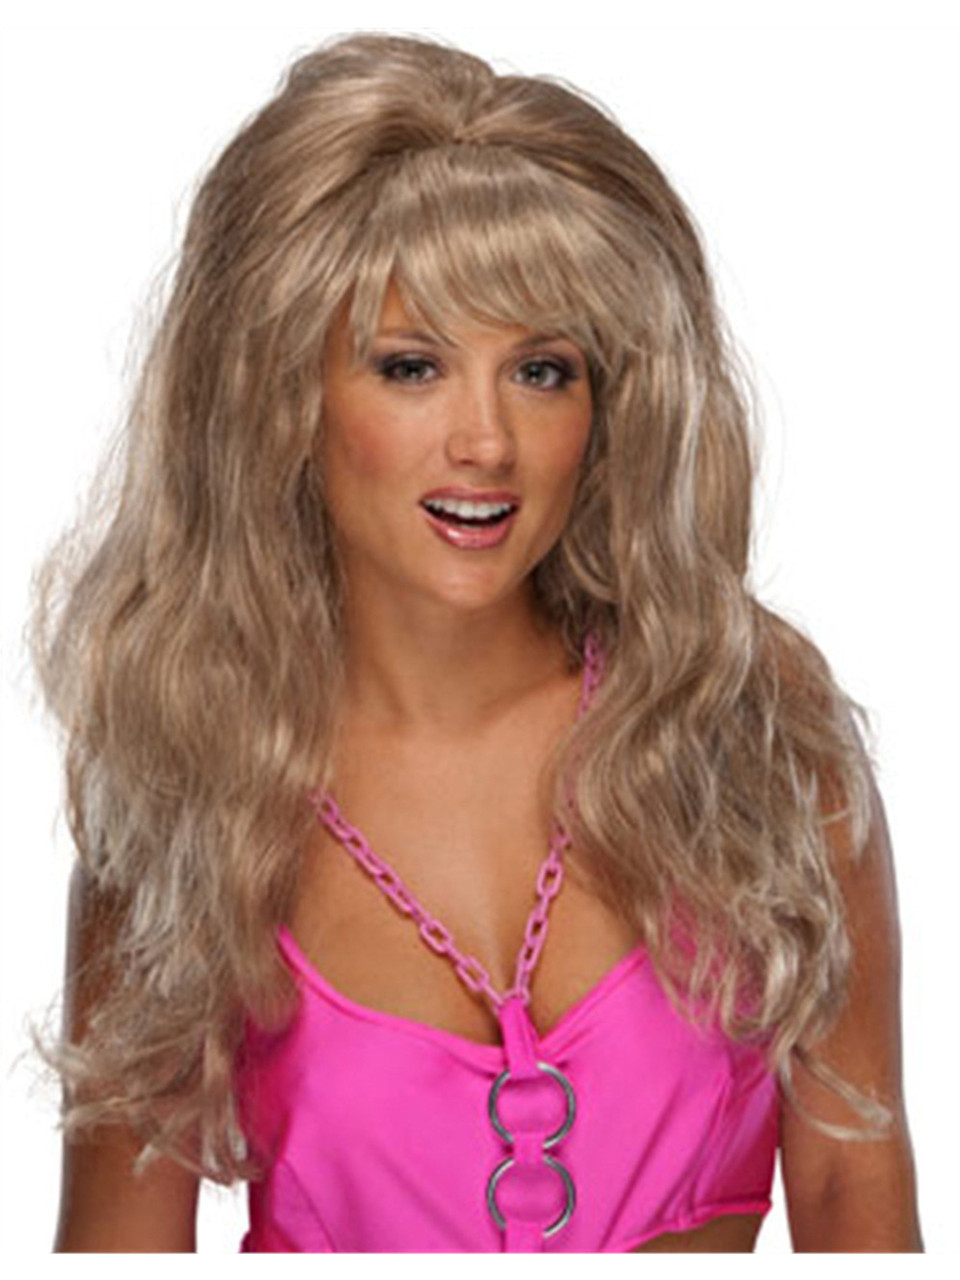 Adult's Brigitte Bardot Blonde Sex Kitten 50s or 80s Costume Wig